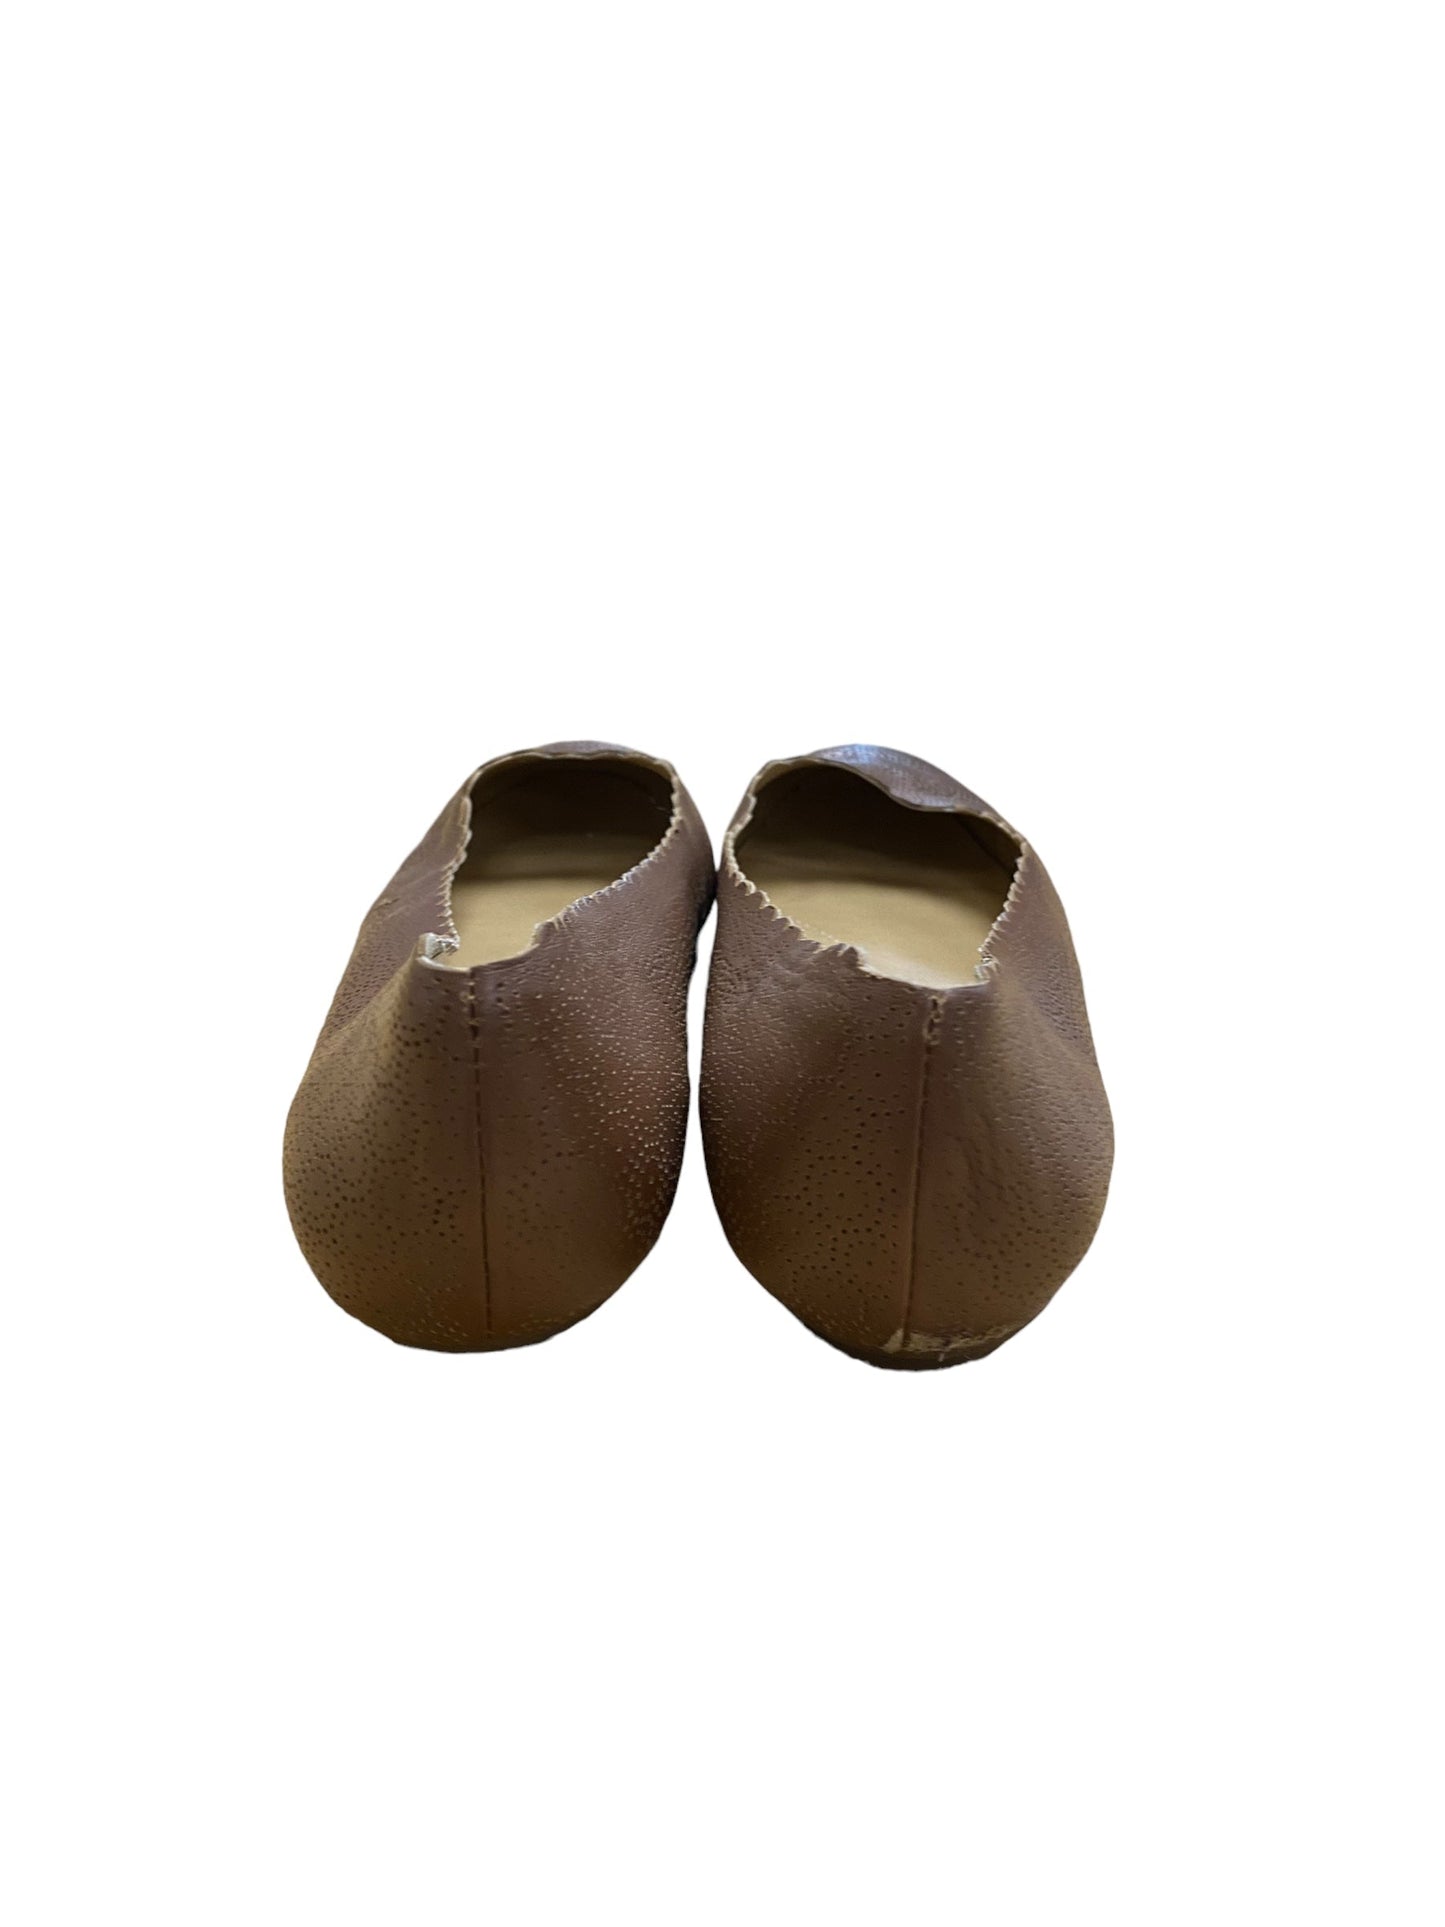 Brown Shoes Flats Vaneli, Size 8.5